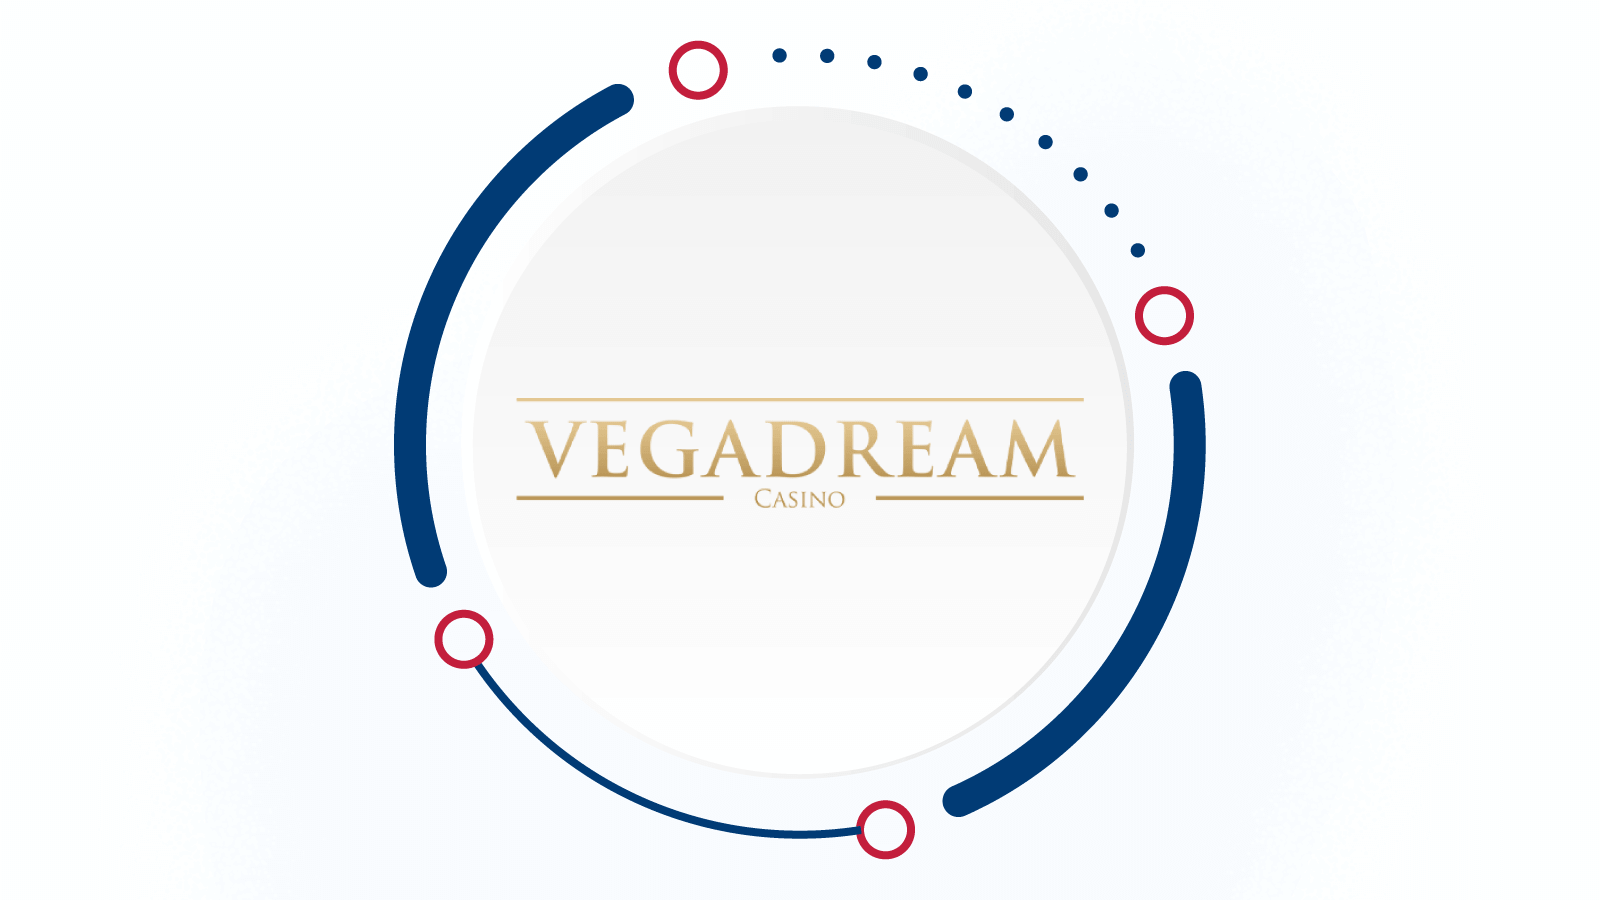 Vega Dream – Launch Year 2021